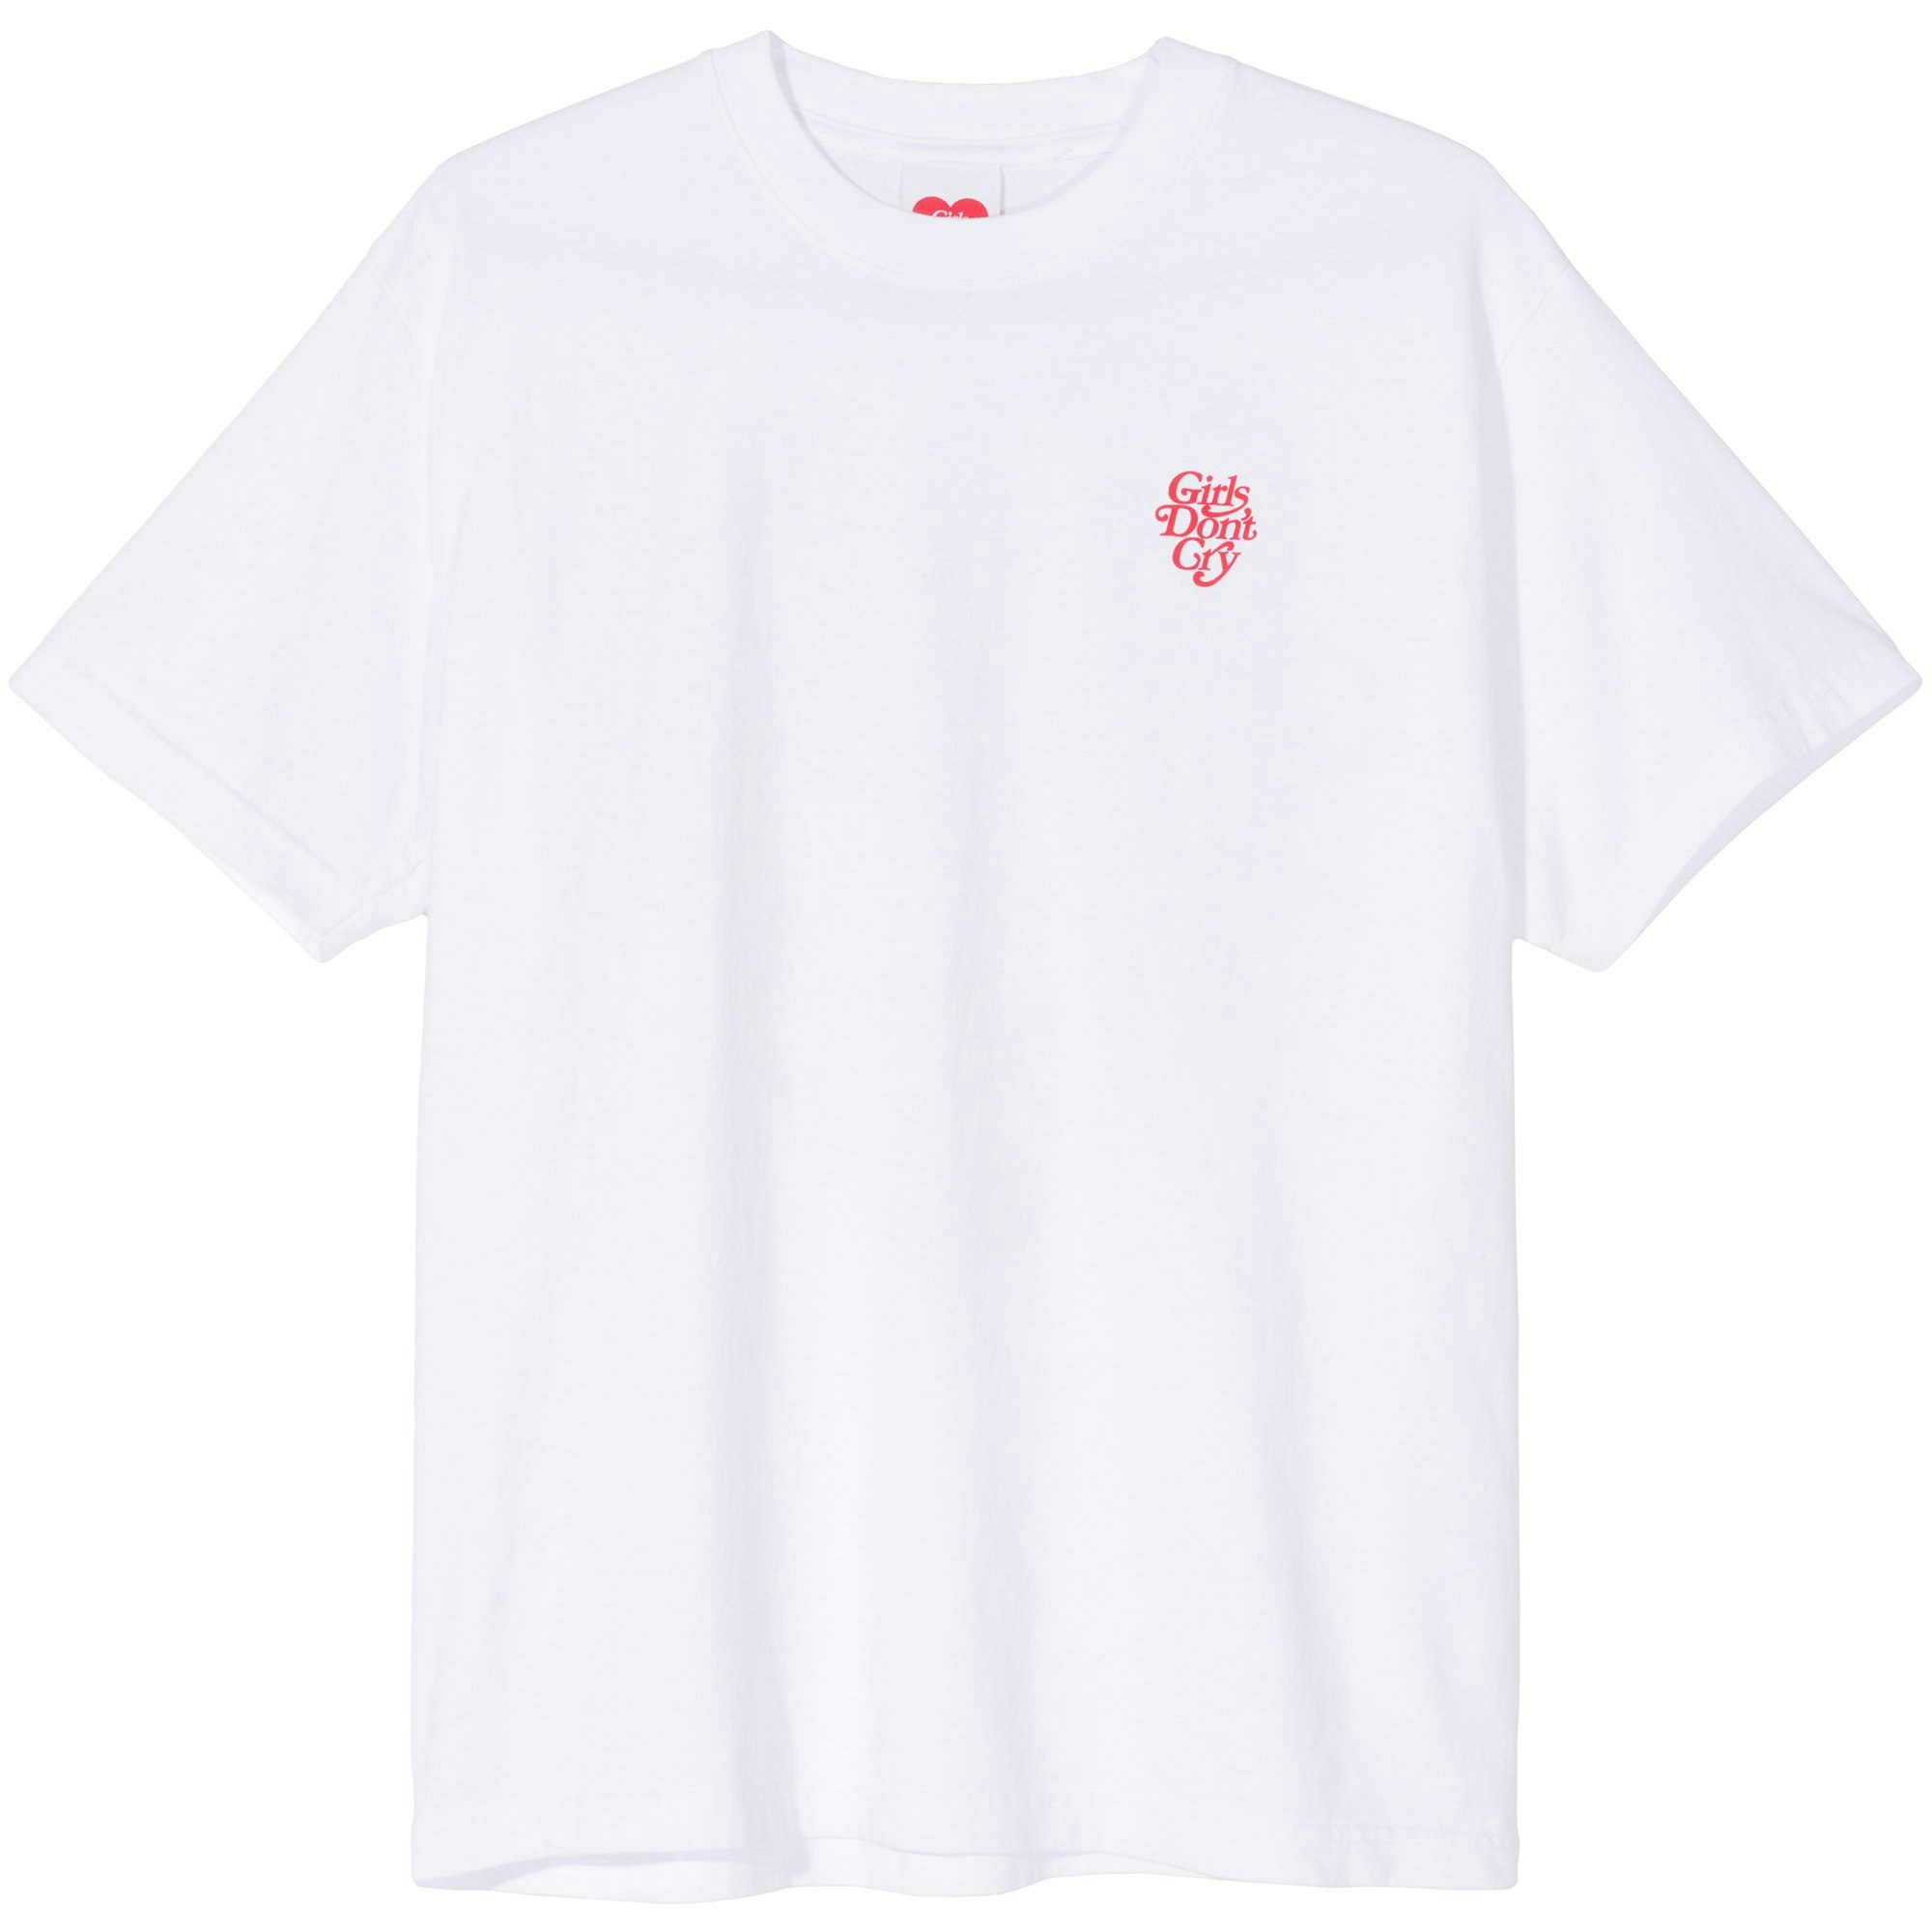 Girls Don't Cry Logo T-Shirt White - FW19